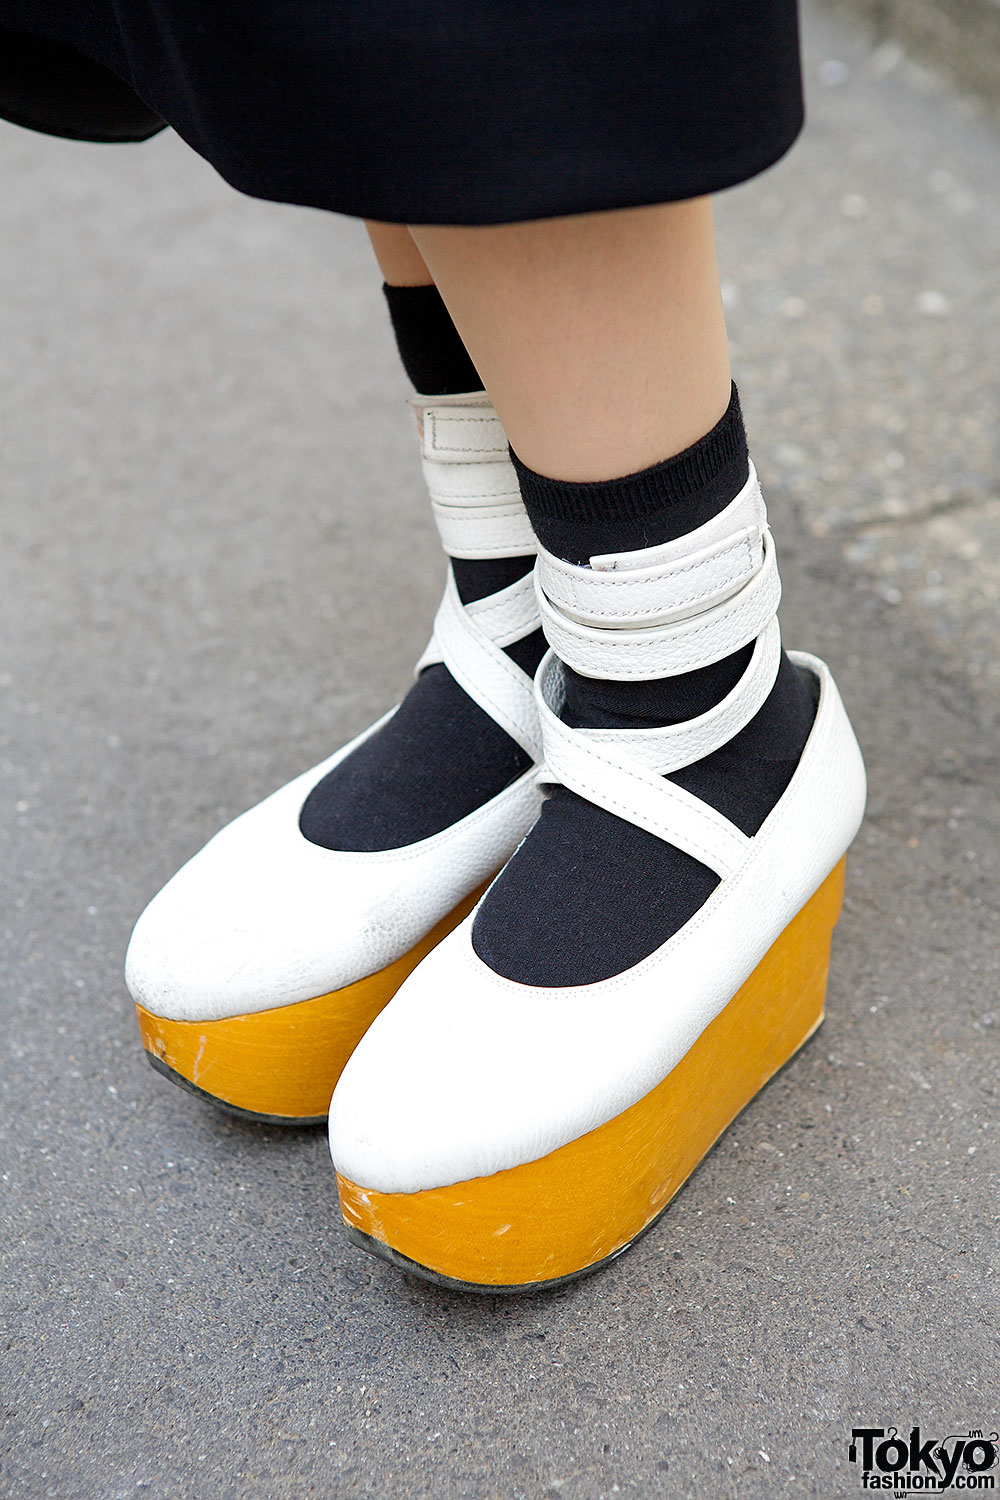 Heart-Shaped Milk Bag, Vivienne Westwood Rocking Horse Shoes